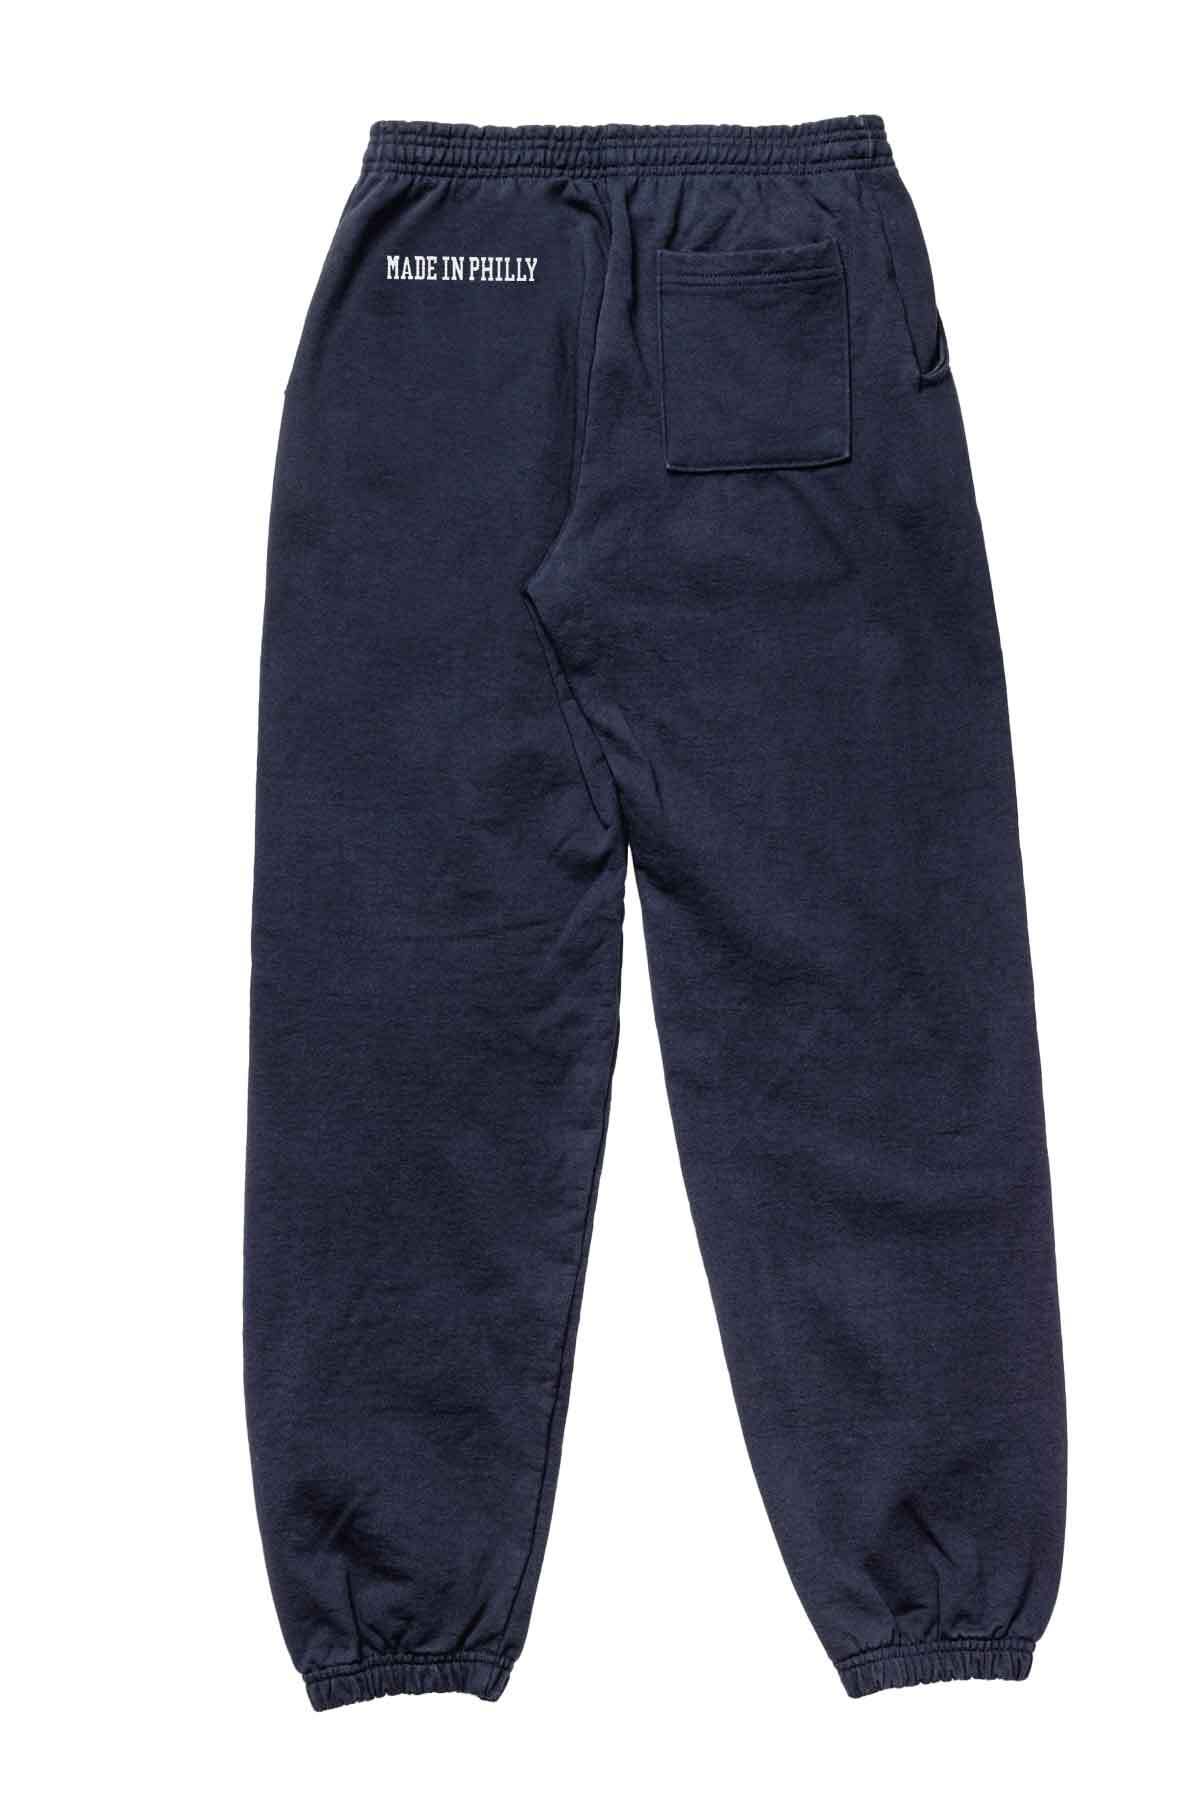 Sweatpants for sale in Philadelphia, Pennsylvania, Facebook Marketplace